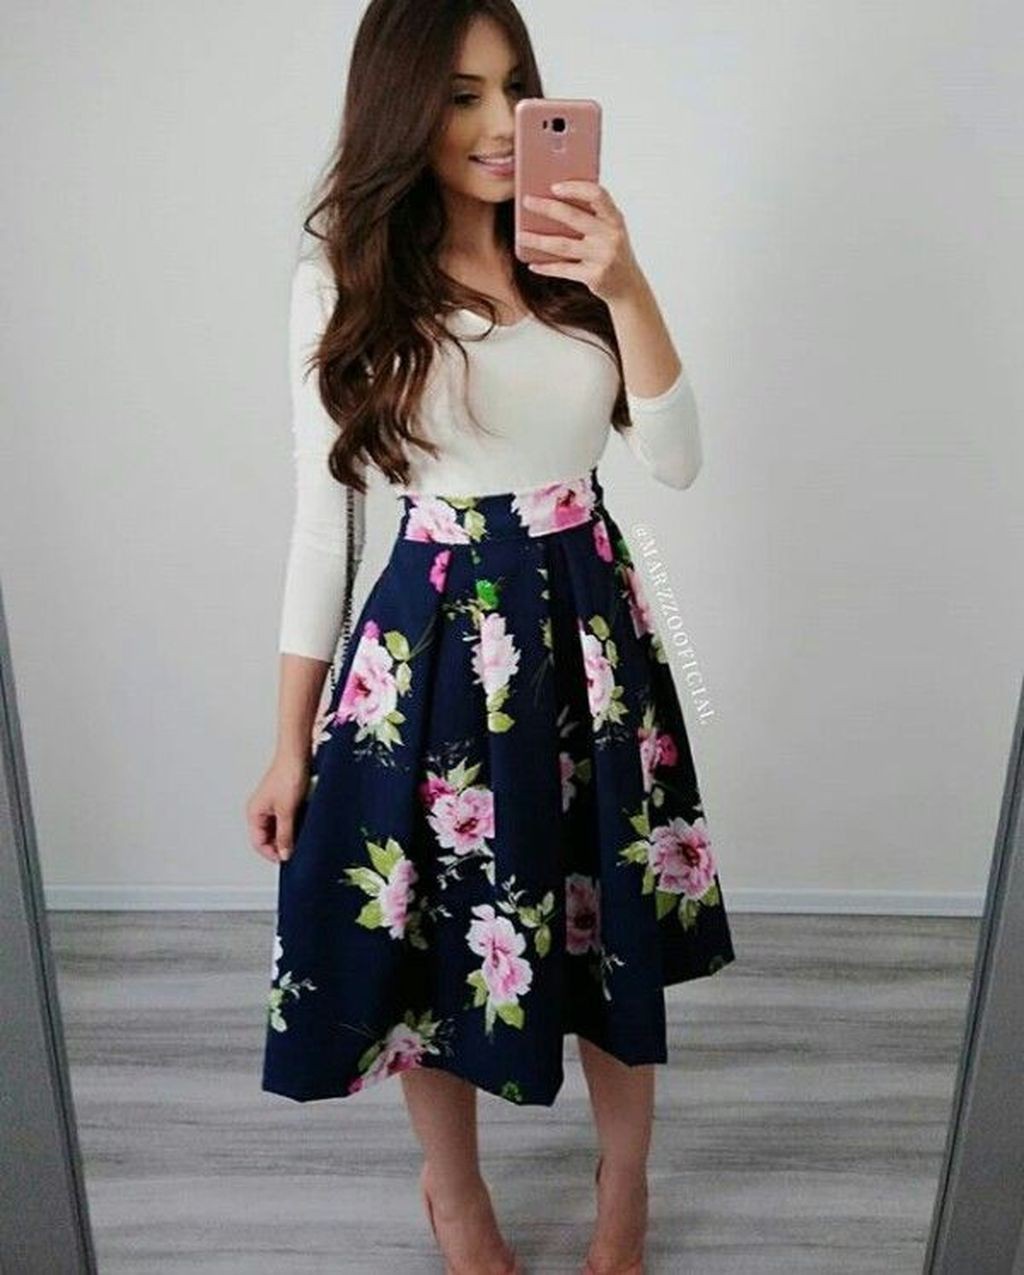 Floral skirt outfit ideas, Floral Skirt: Floral Skirt,  Floral Midi,  Casual Outfits,  Floral Dresses,  Twirl Skirt,  Flowy skirt,  Swing skirt  